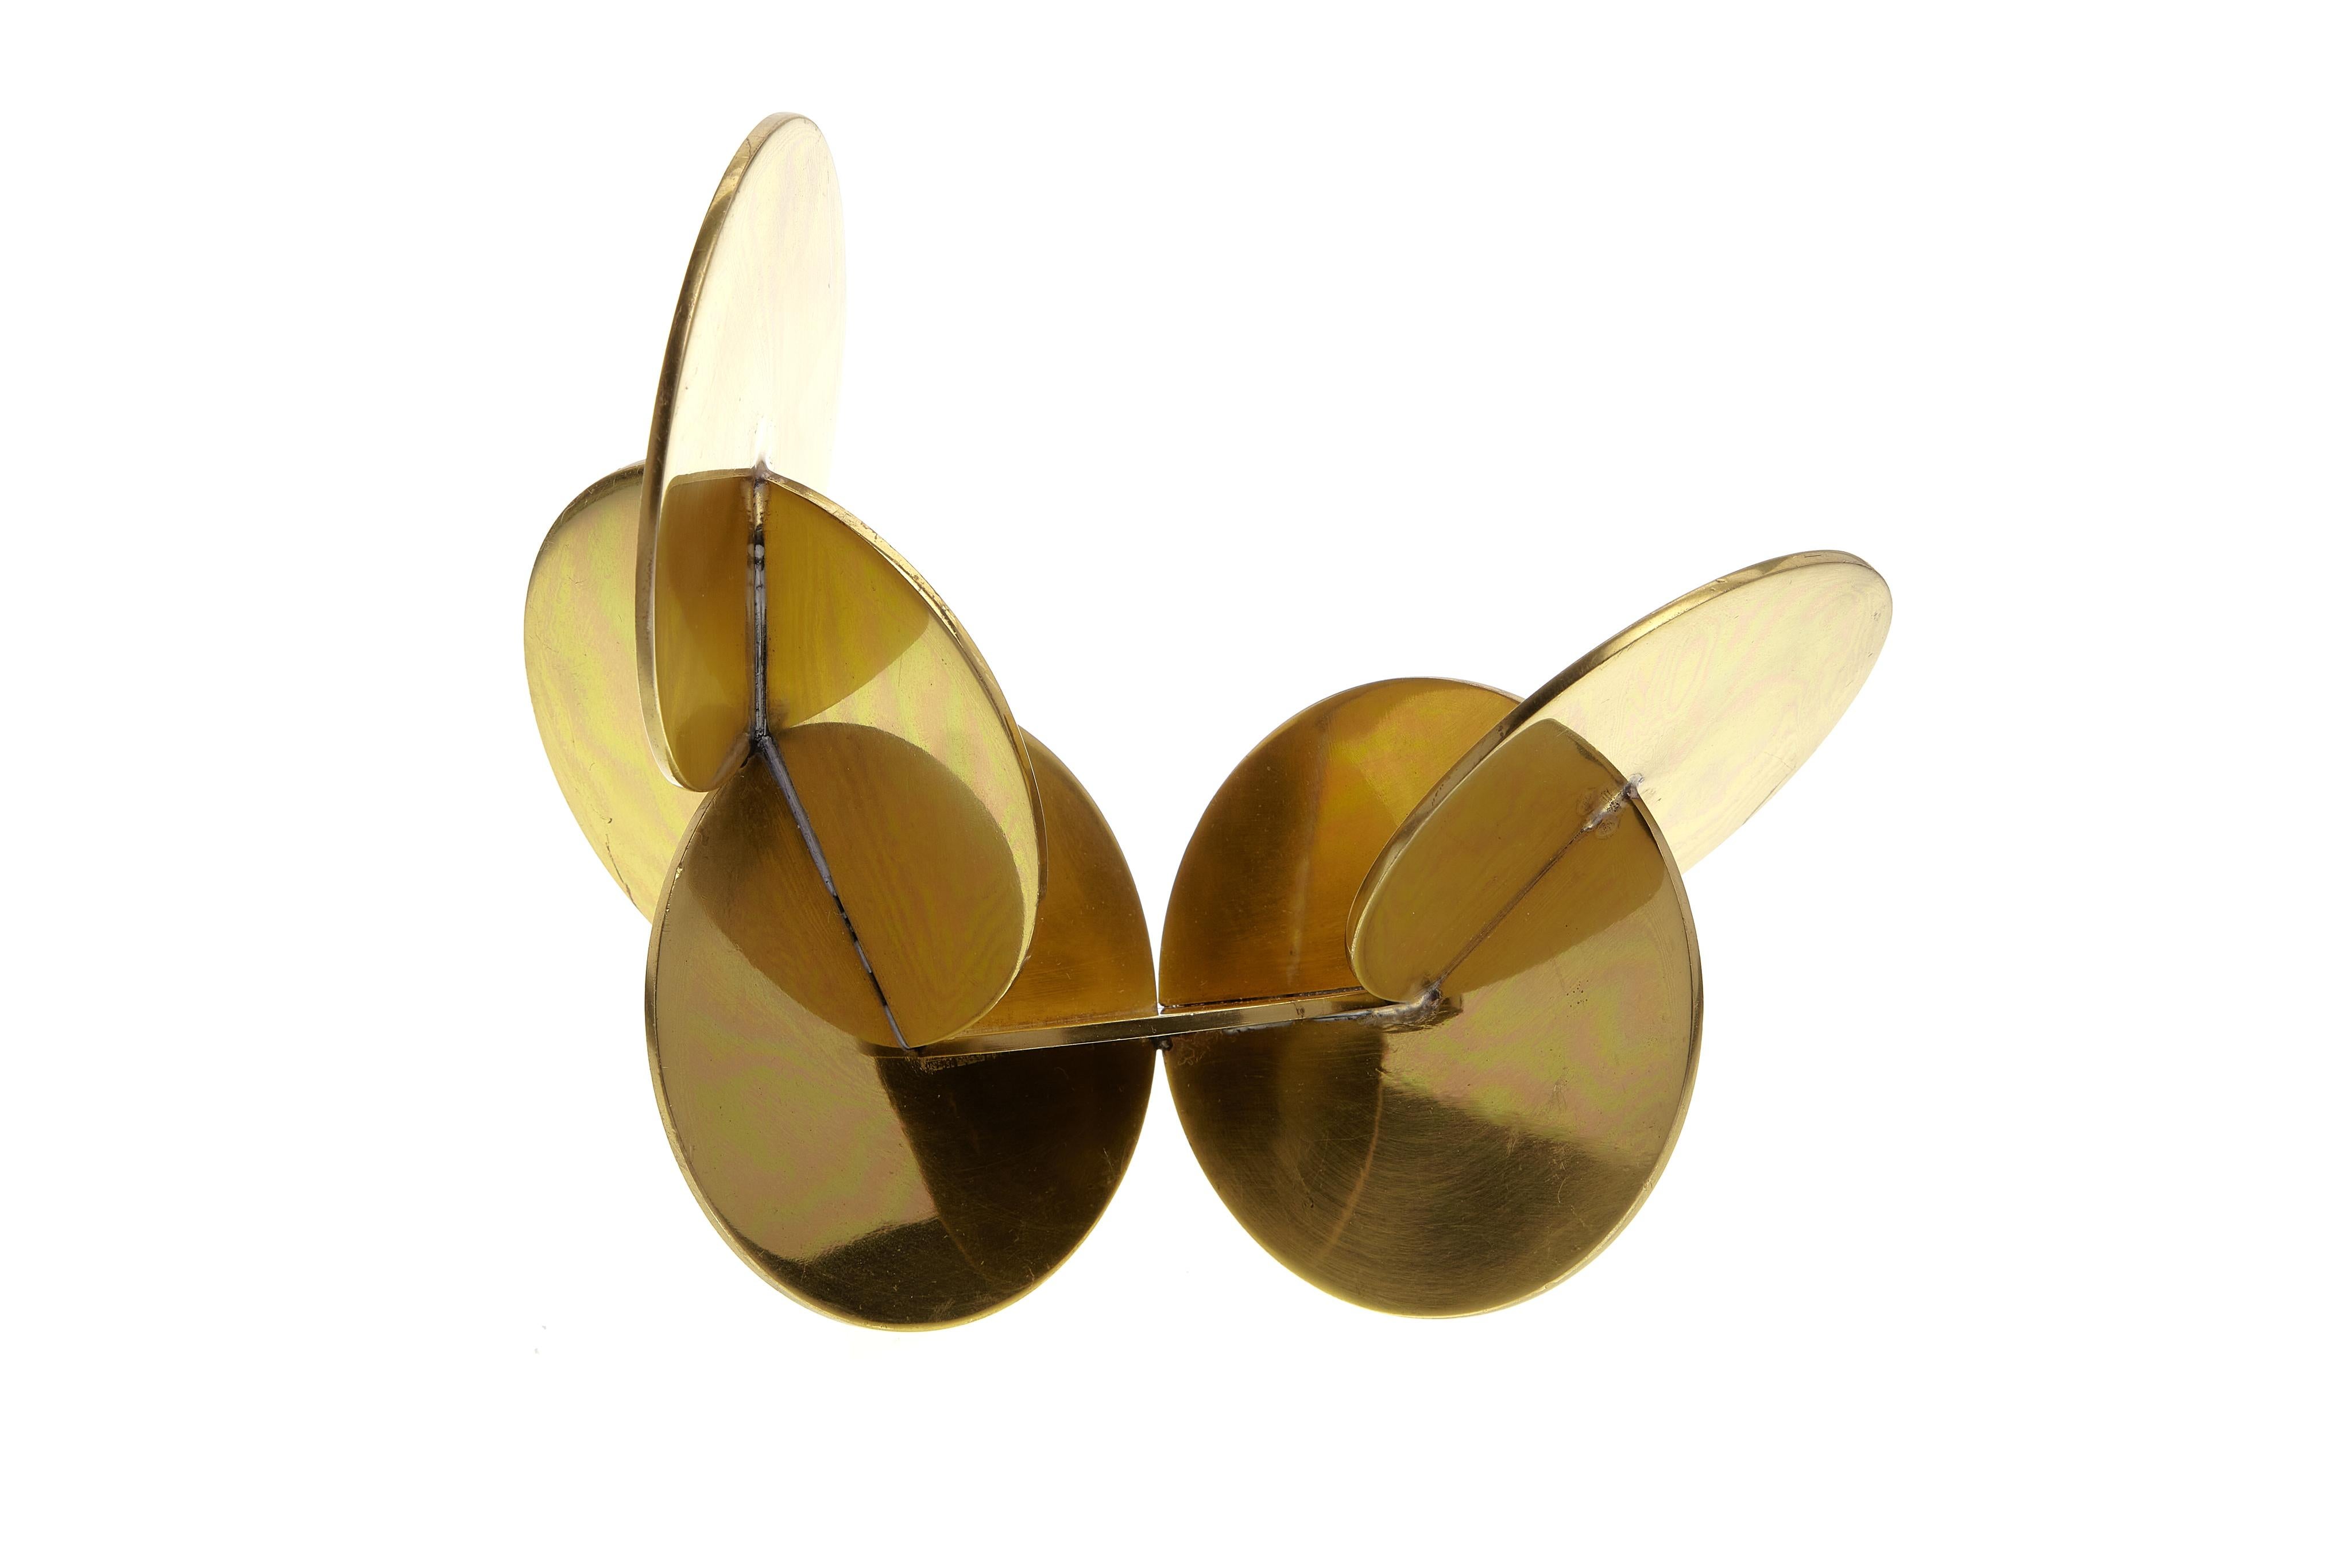 A fine example of modernist sculpture, featuring interlocking brass discs.